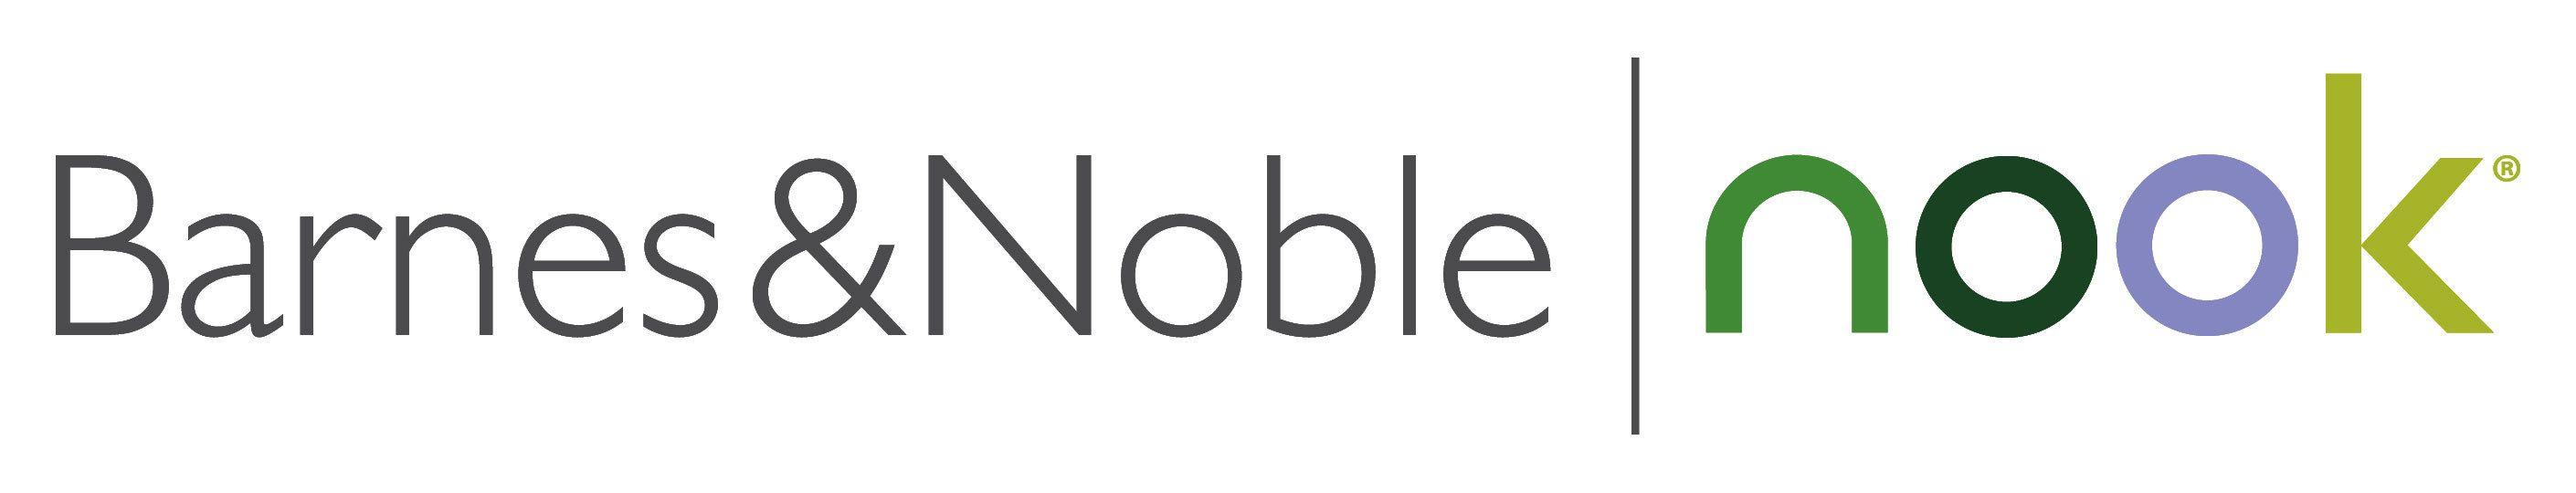 Barnes and Noble Nook Logo - Barnes and noble nook Logos